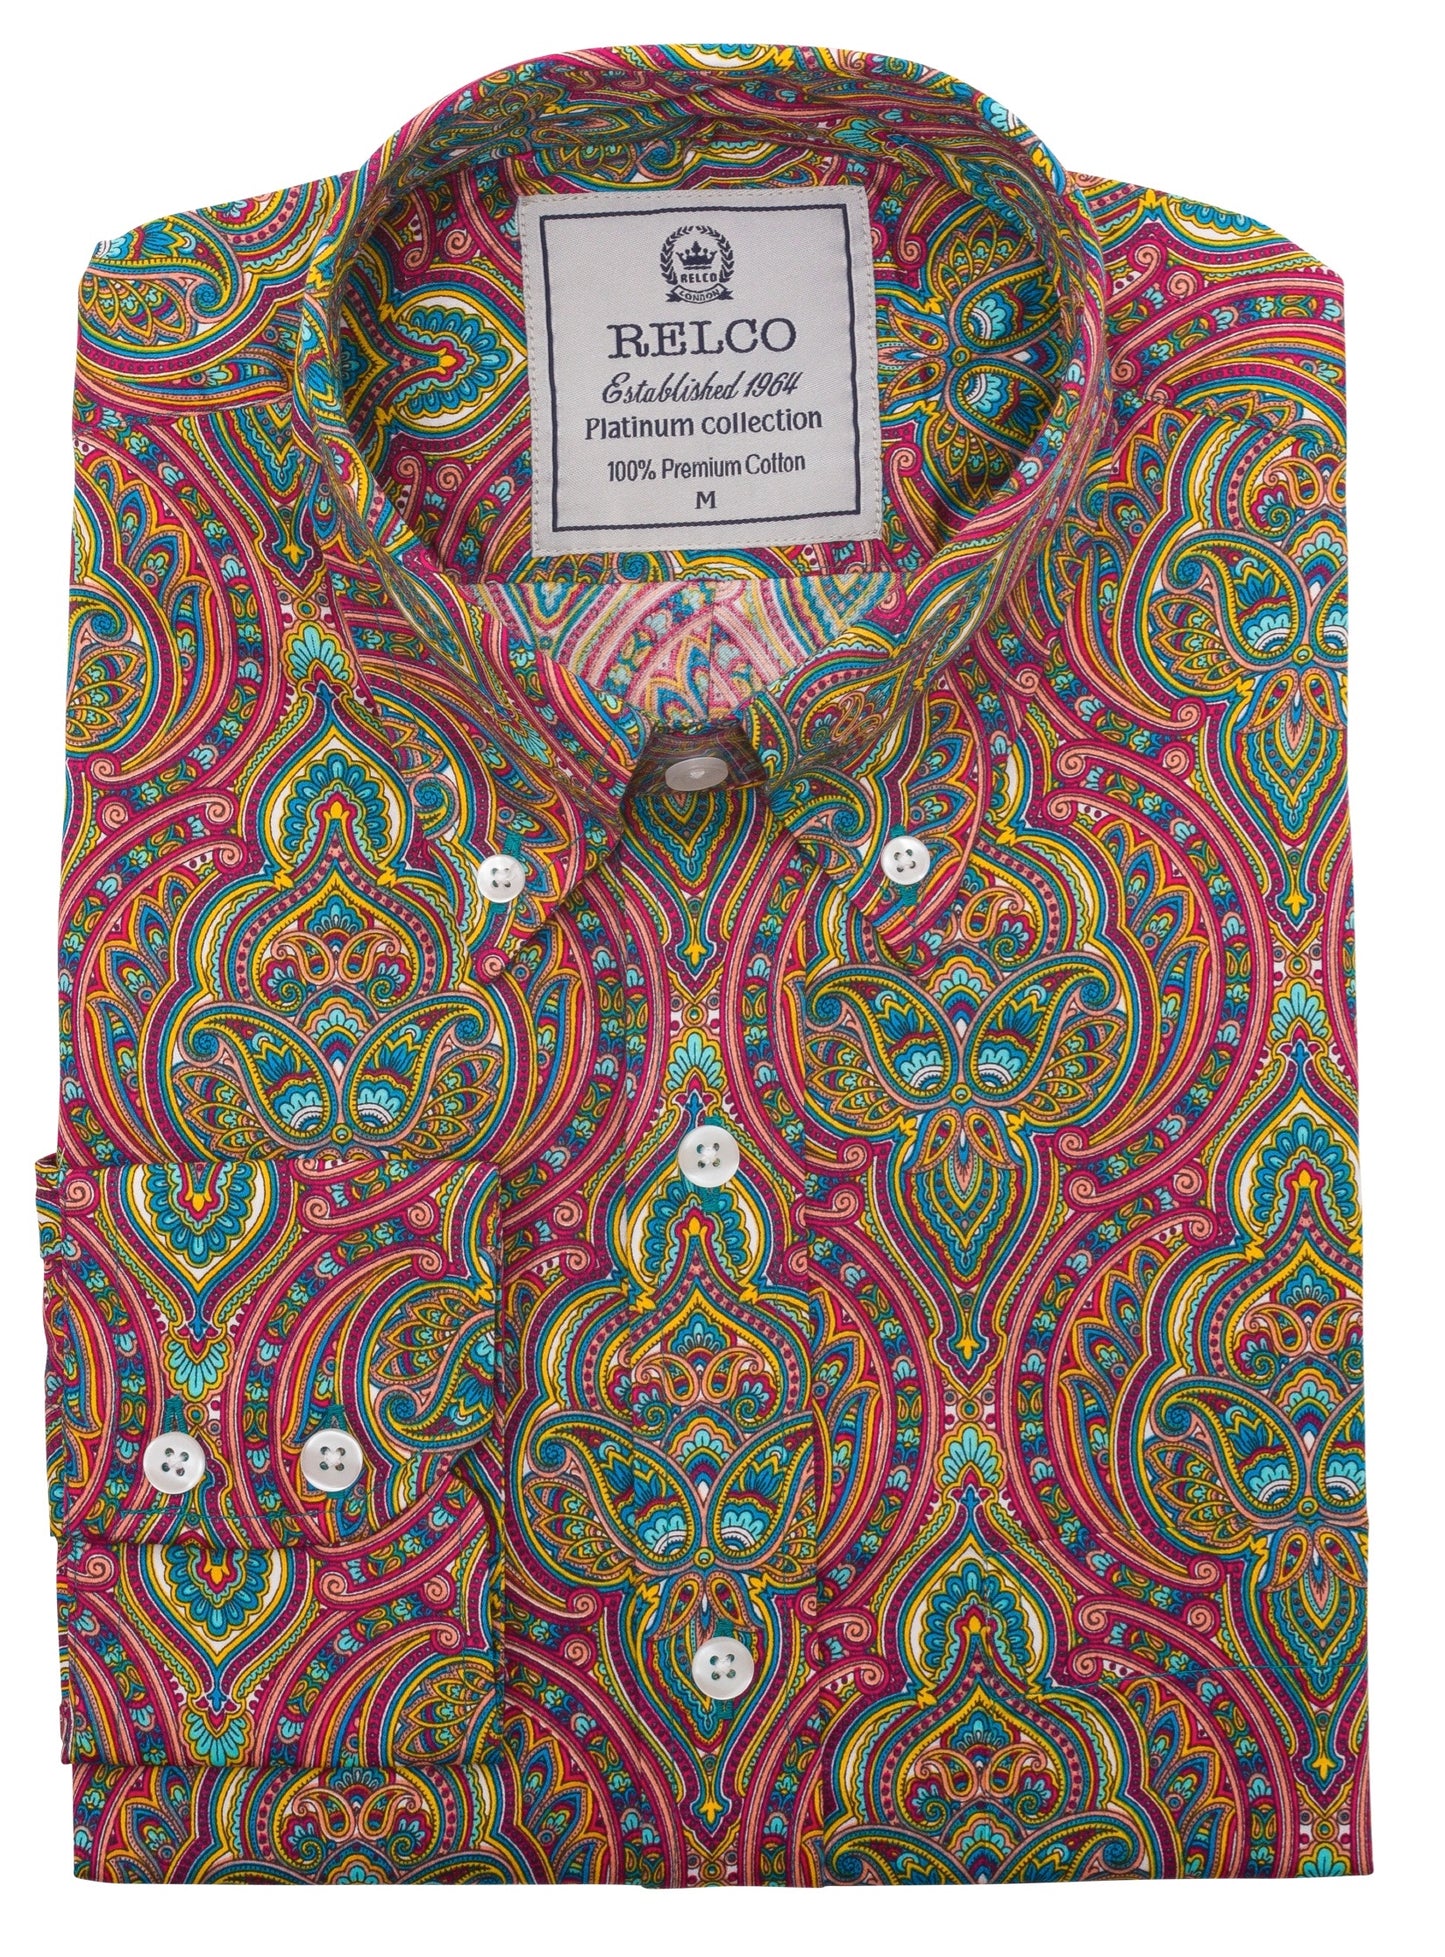 Relco Platinum Multi Paisley Cotton Long Sleeved Retro Mod Button Down Shirt